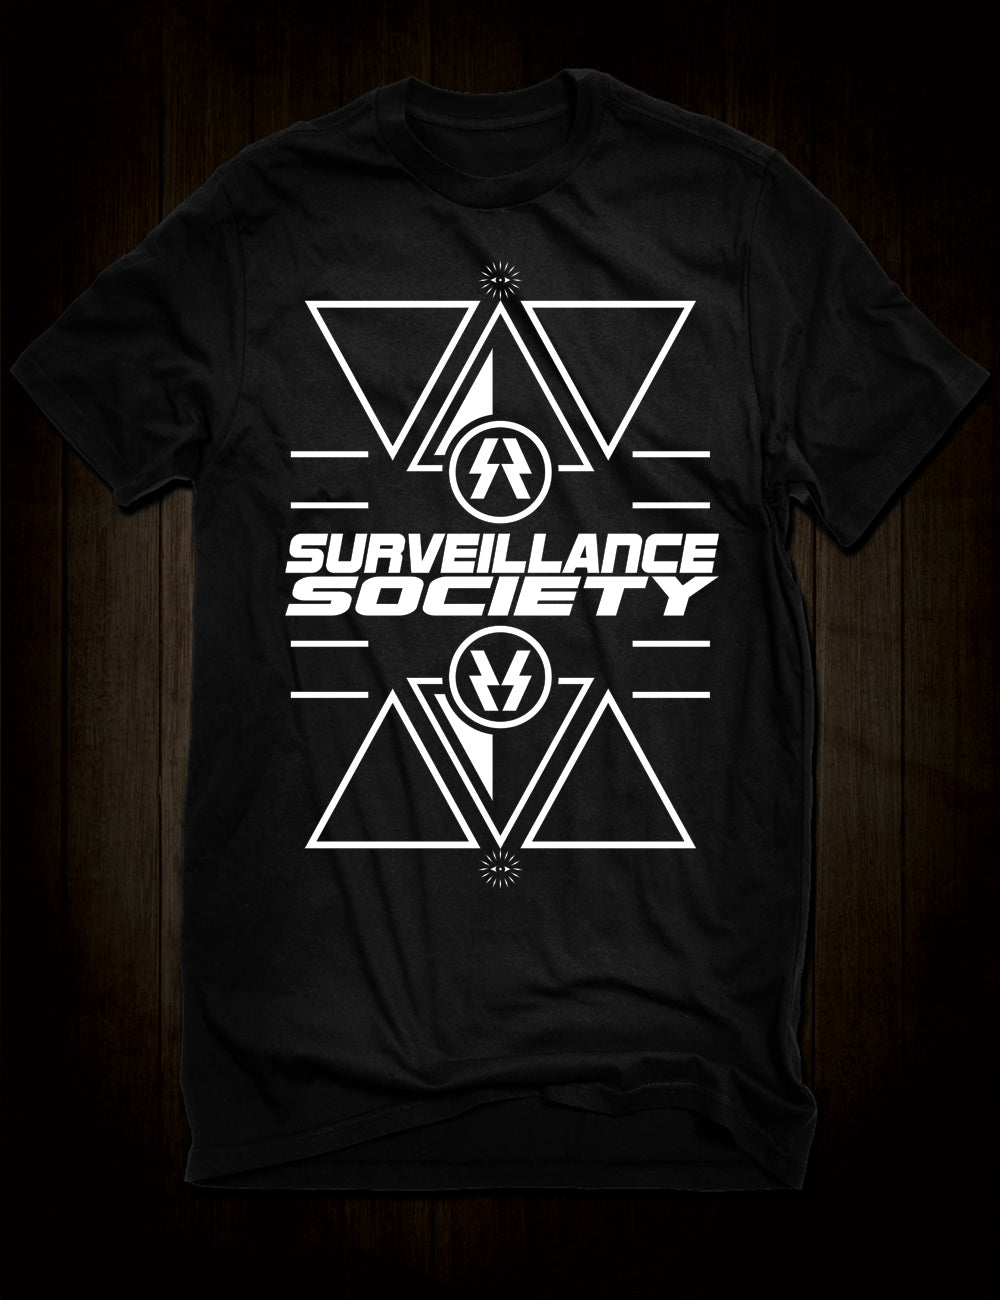 The Surveillance Society T-Shirt